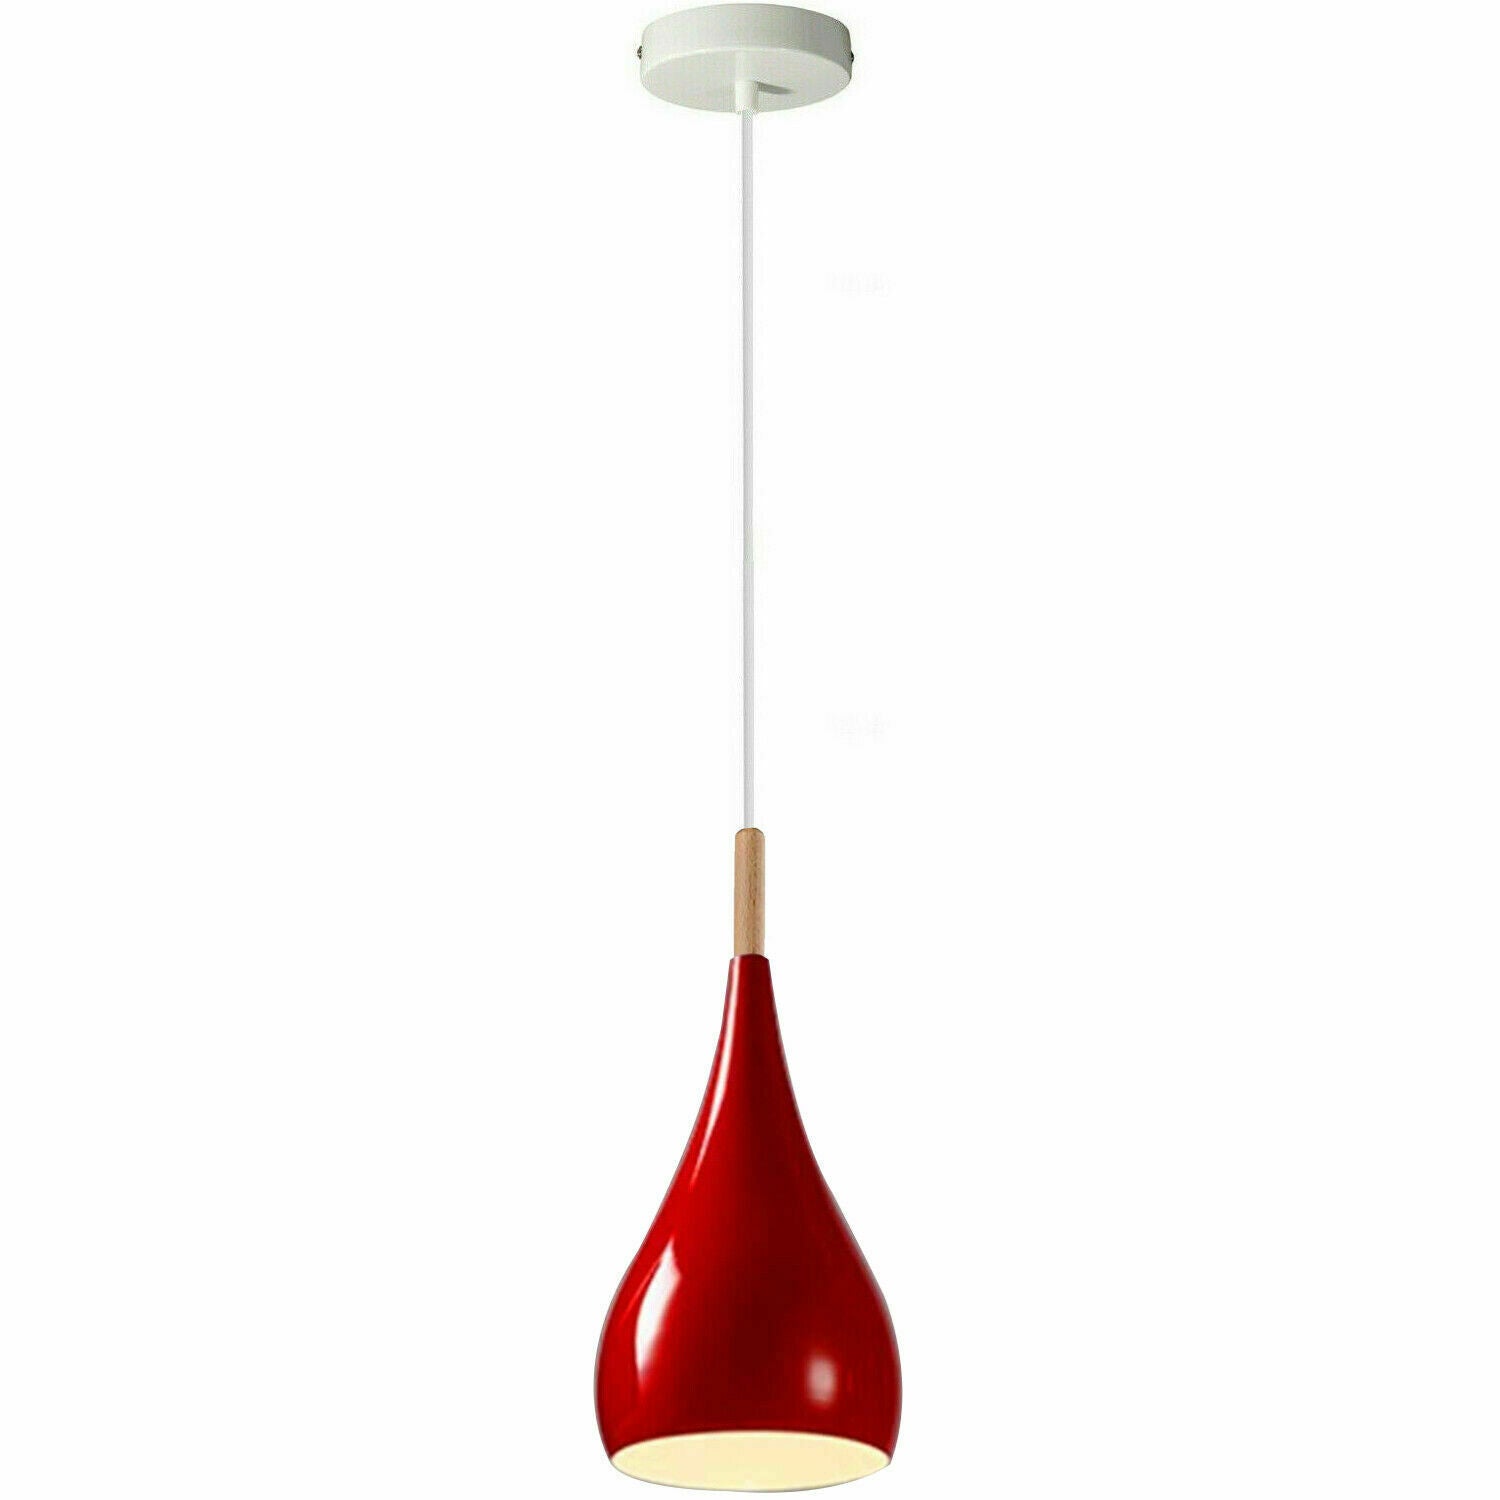 Red colour Retro Style Metal Ceiling Hanging Pendant Light Shade Modern Design~1649 - LEDSone UK Ltd